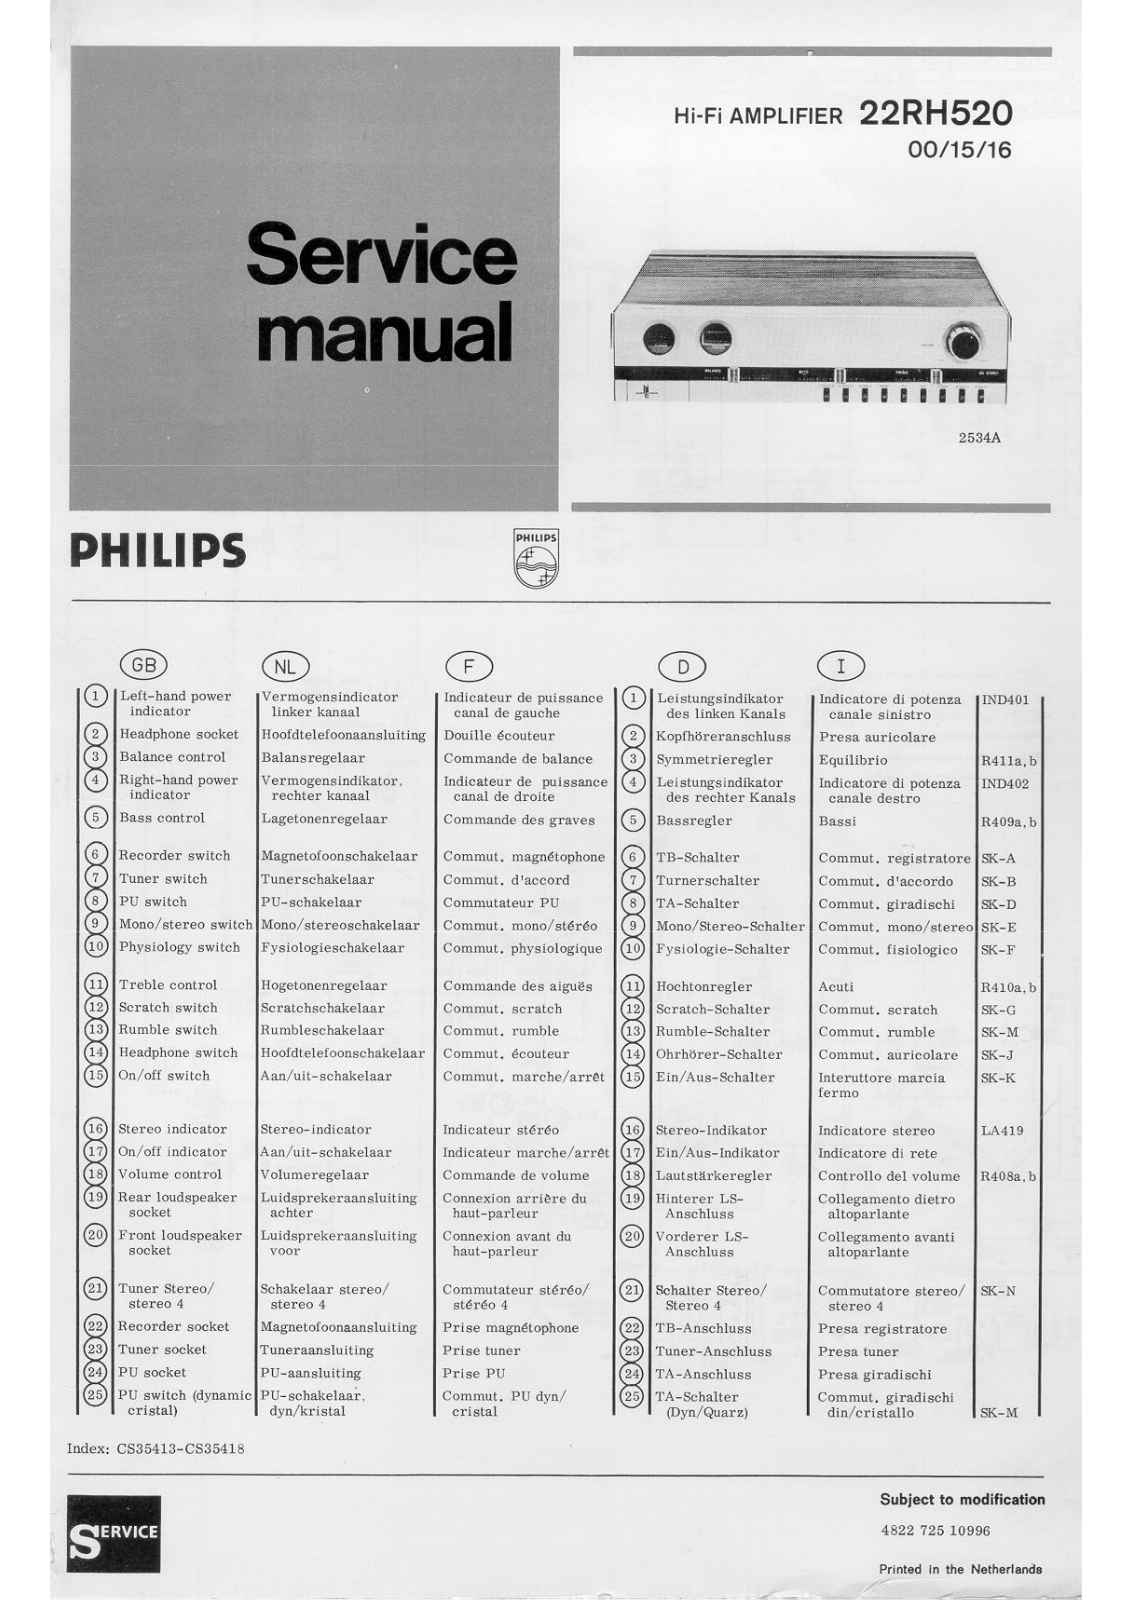 Philips 22-RH-520 Service Manual